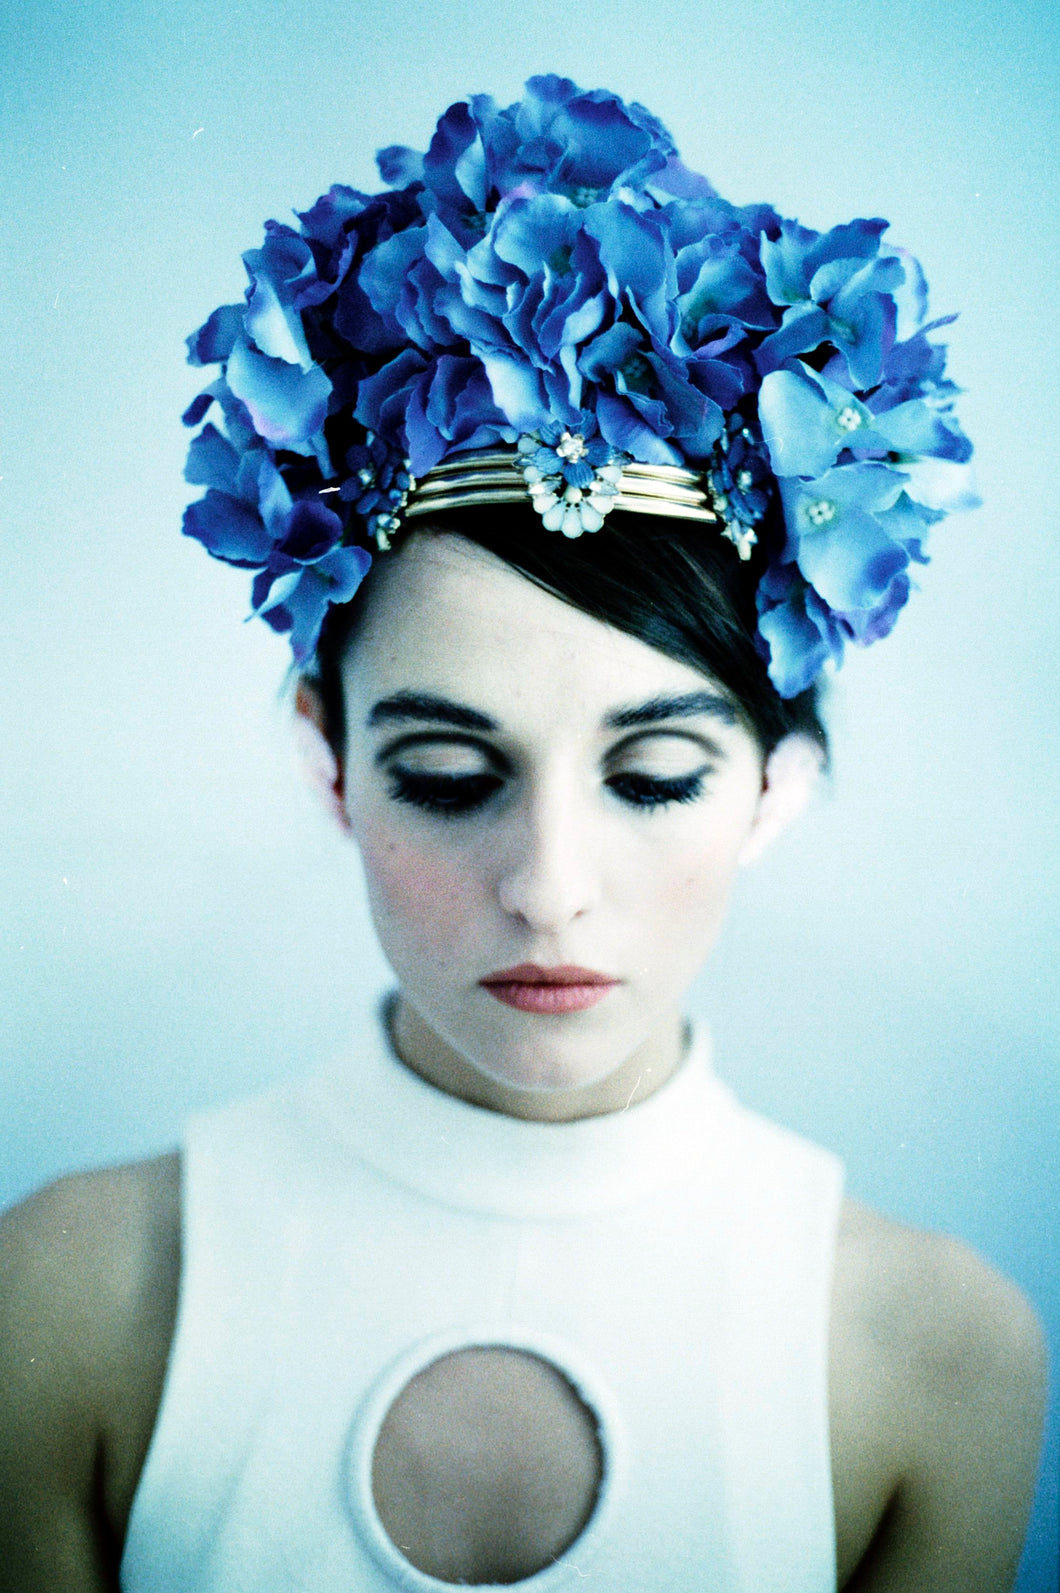 Blue Hydrangea jewelled crown